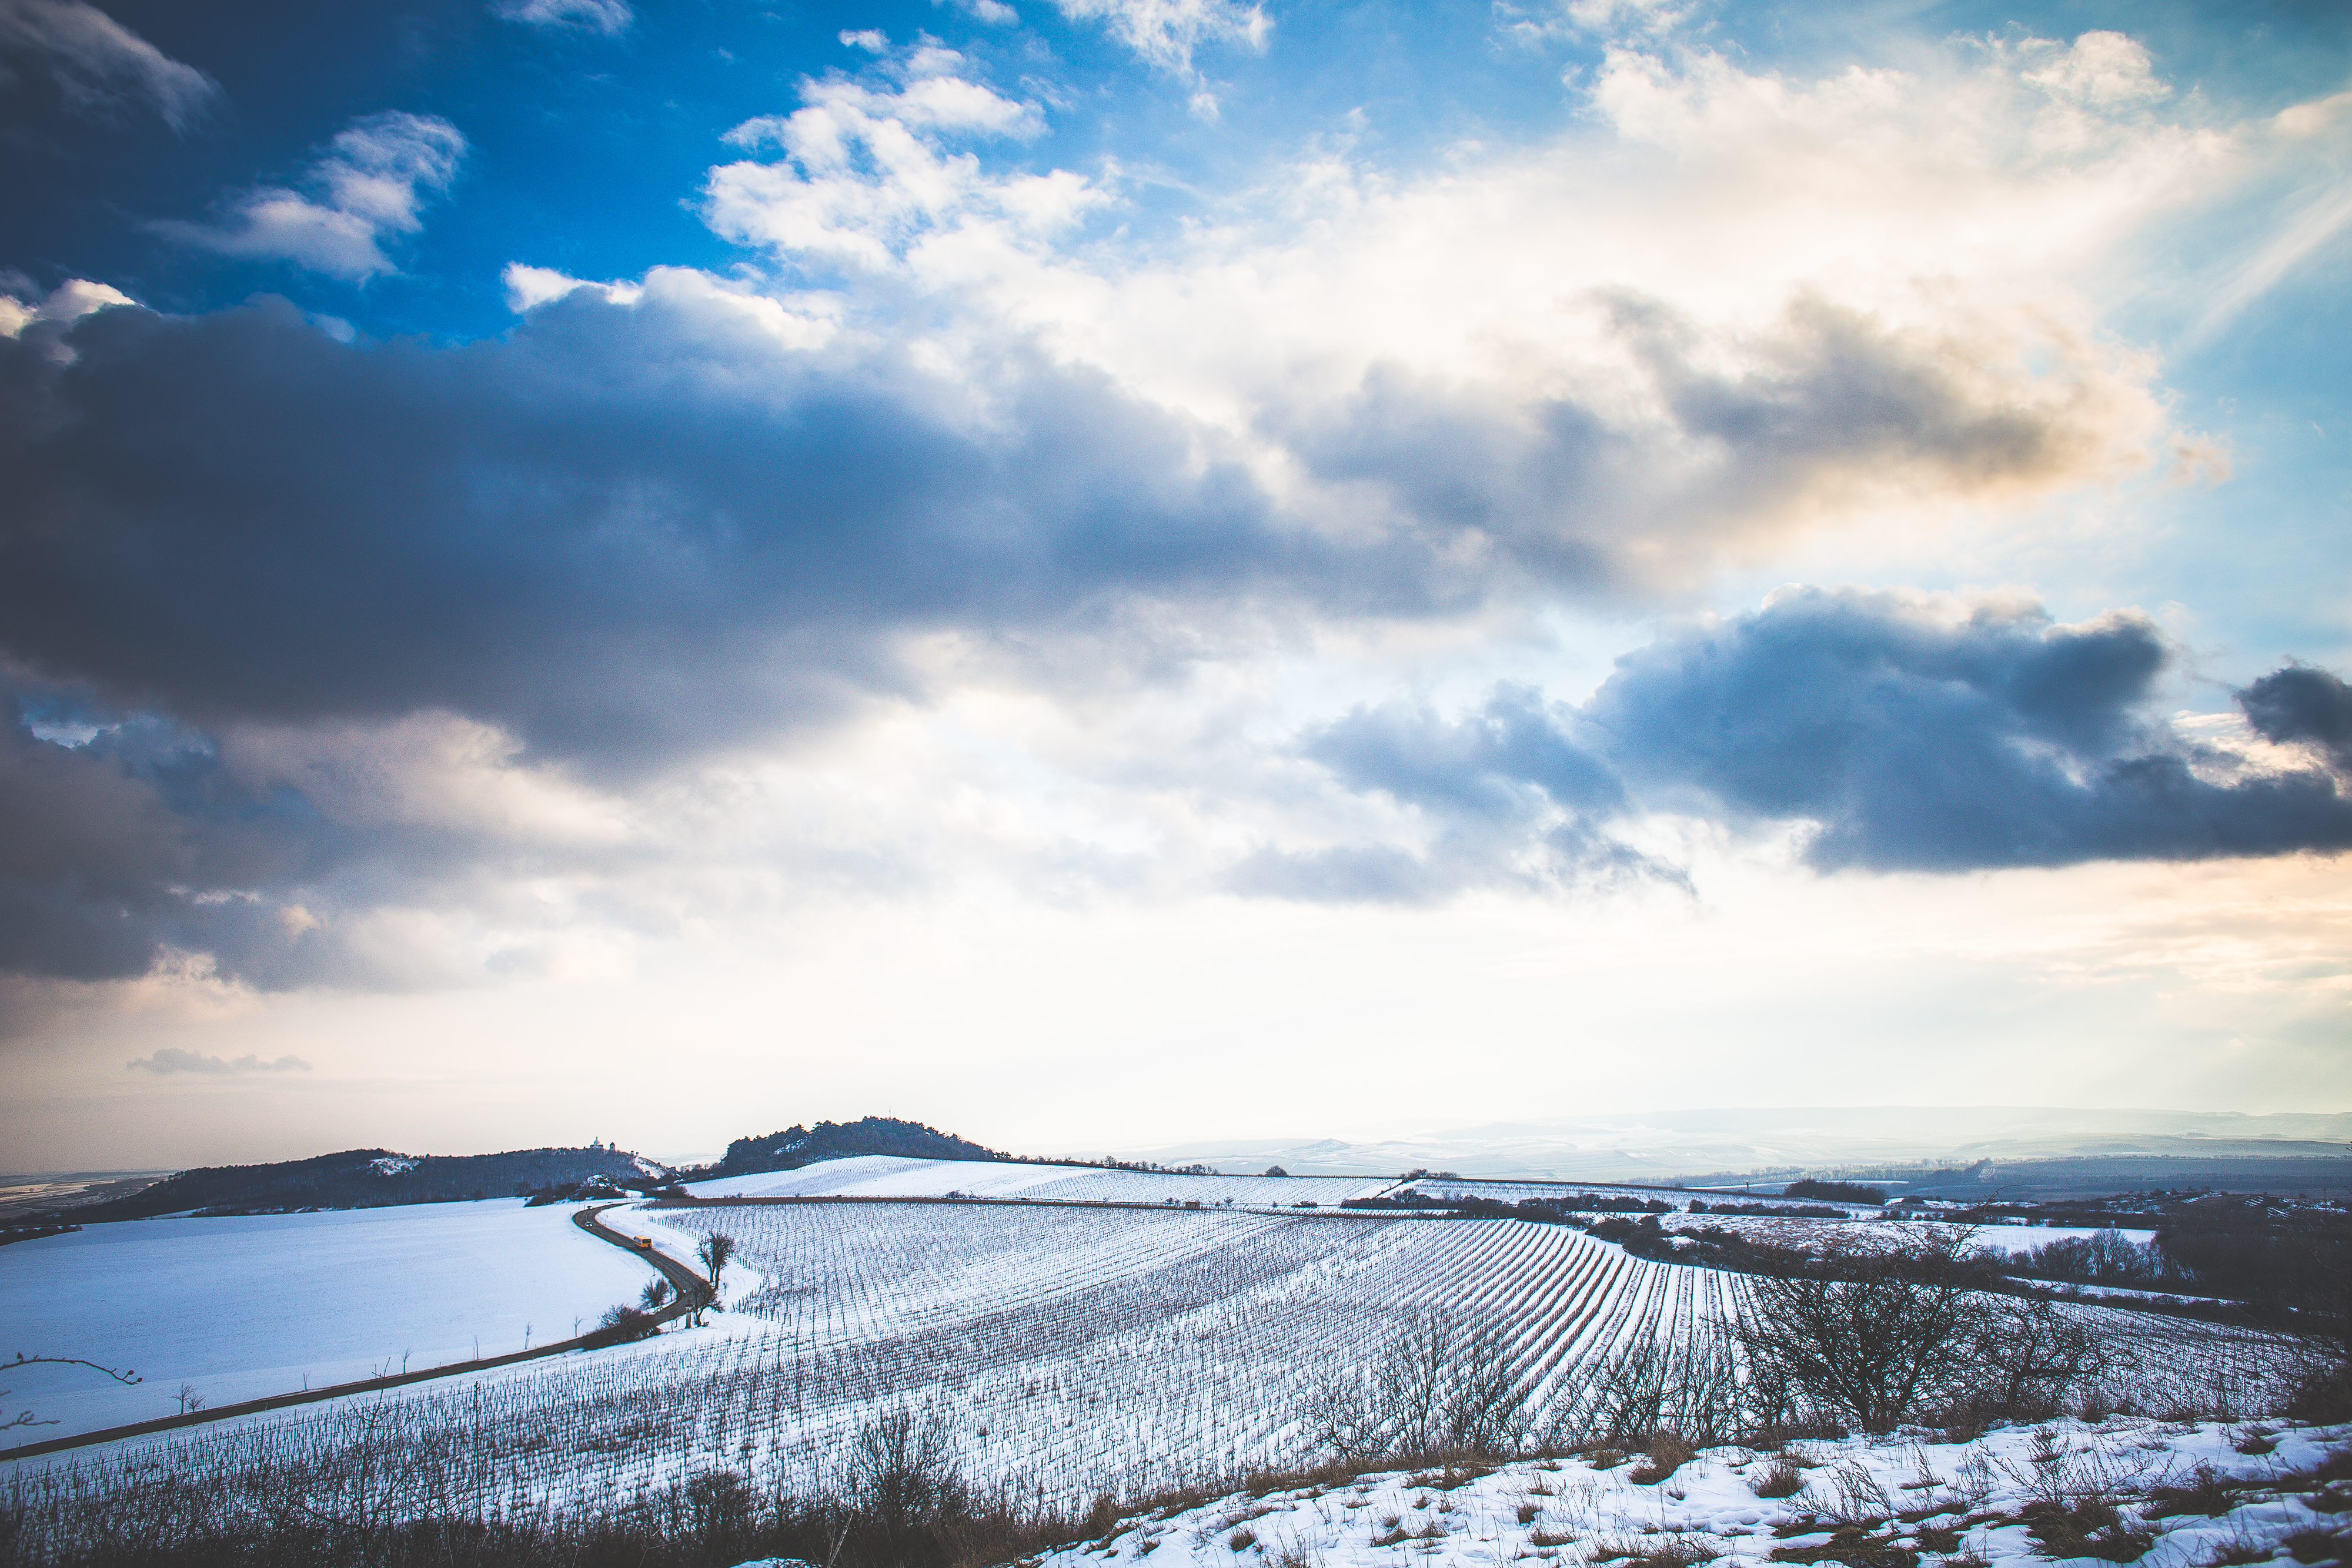 Czech Cloudy Winter Scenery Free Stock Photo